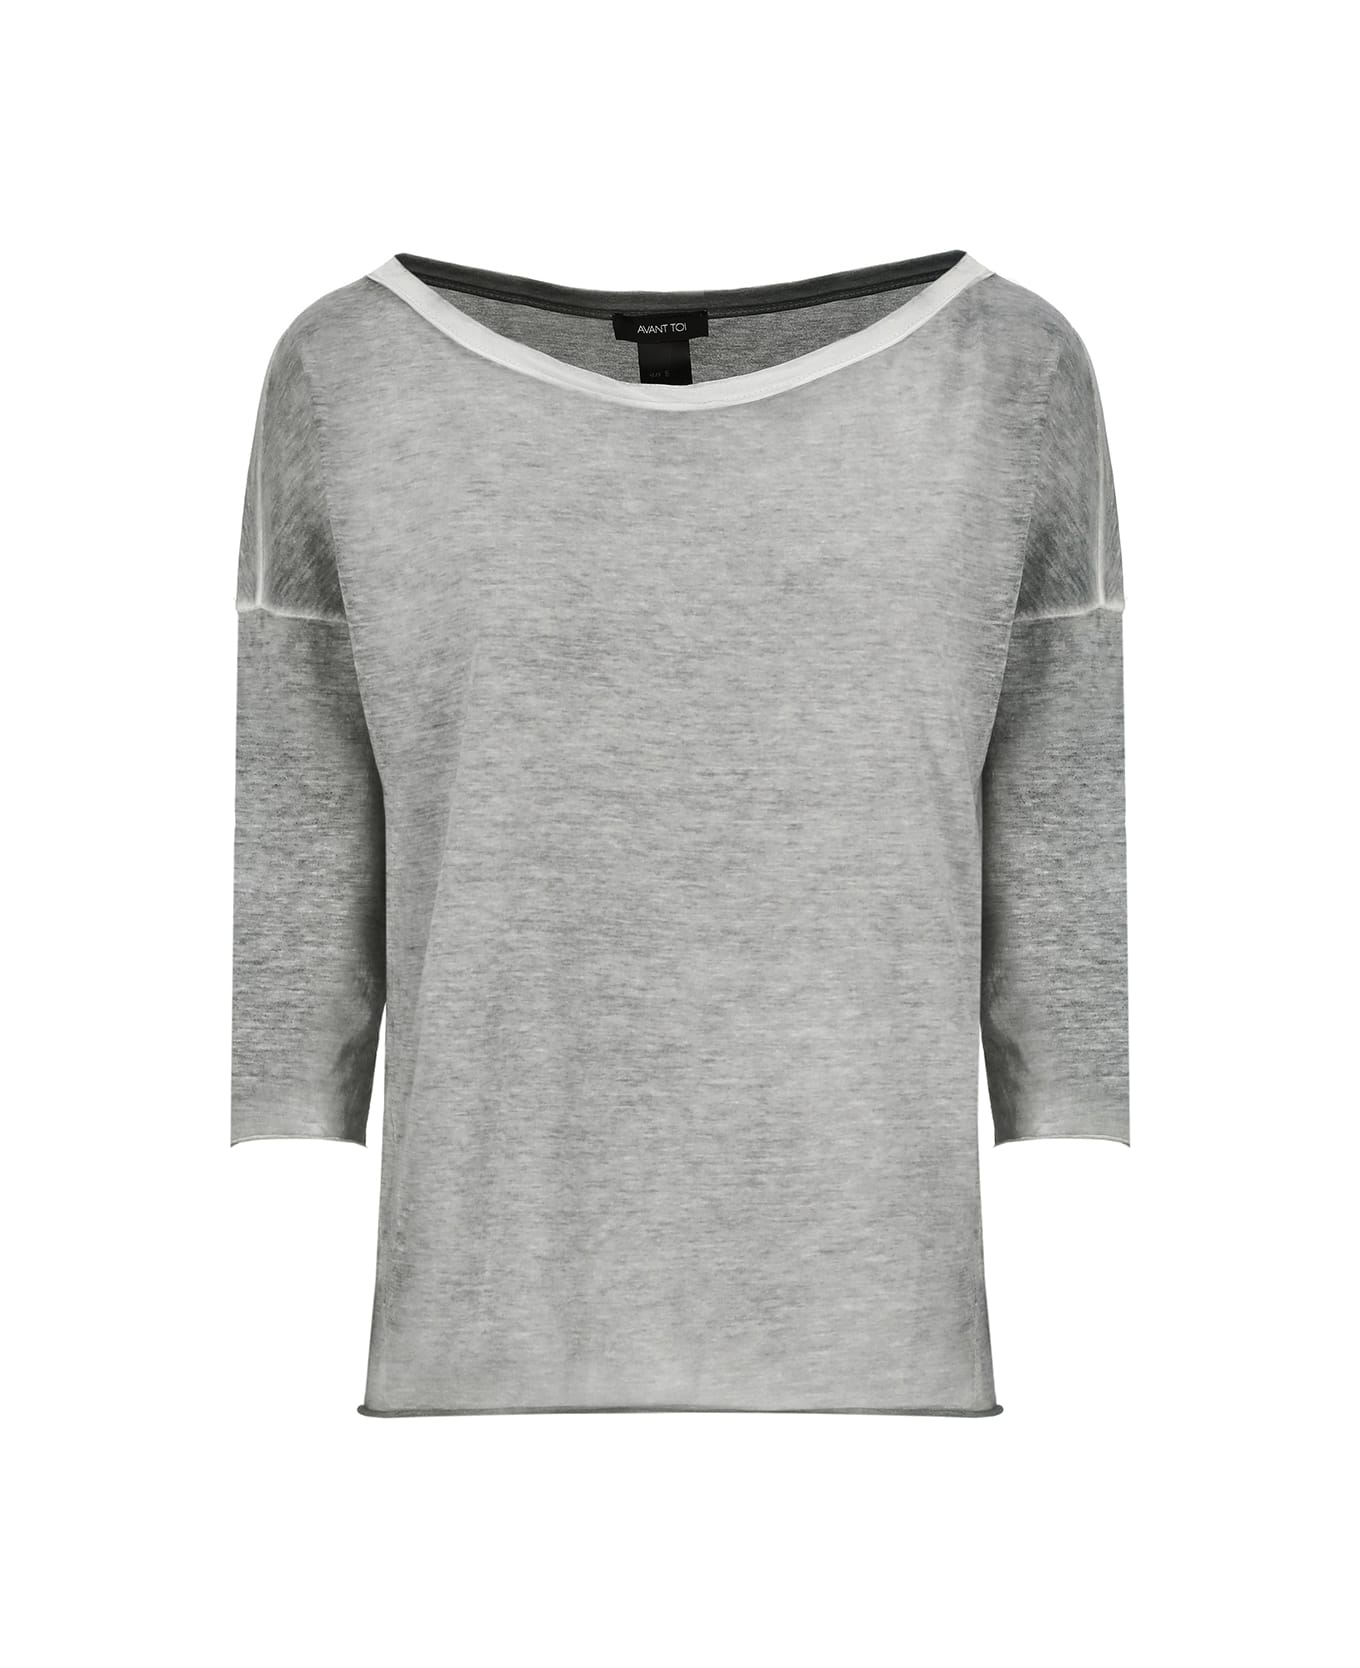 Avant Toi Cotton Sweater - Grey